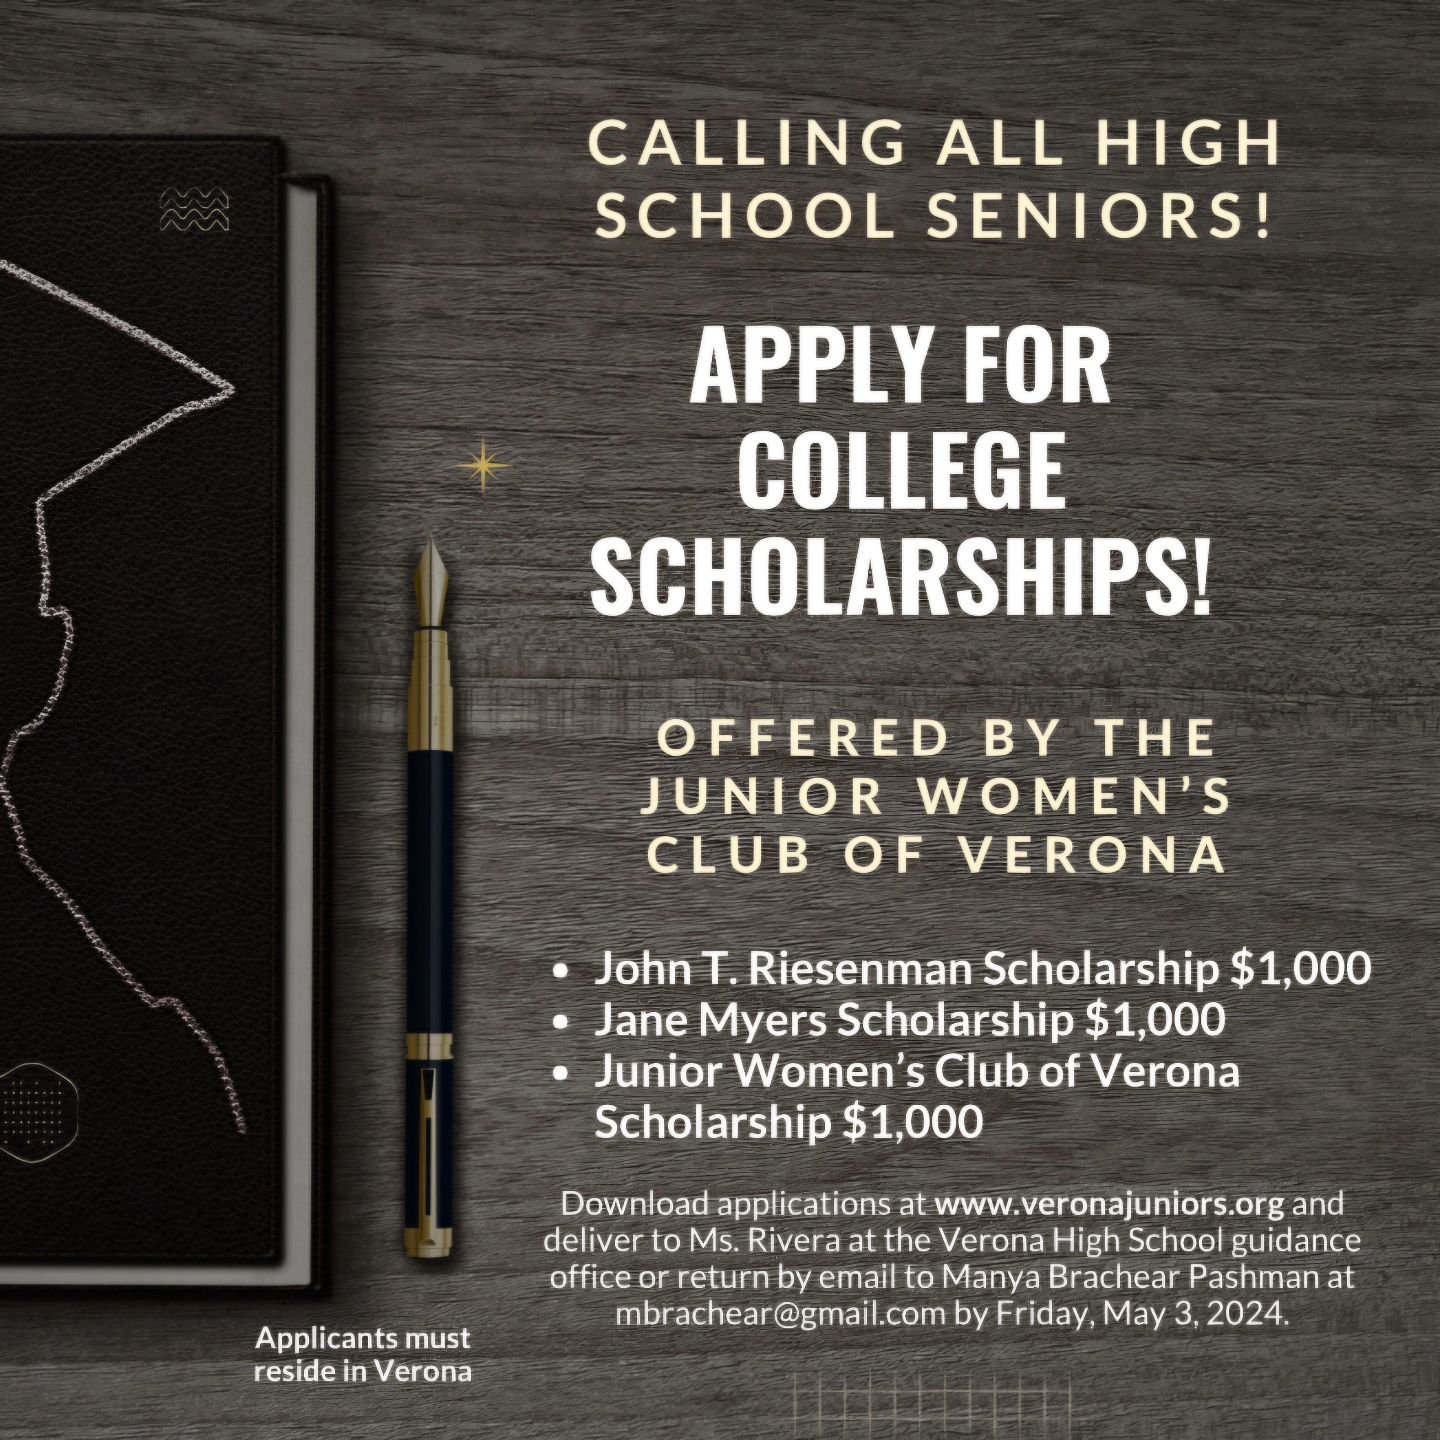 Visit veronajuniors.org/scholarships to apply for our three $1,000 awards. Due May 3rd!

#veronanj #scholarships